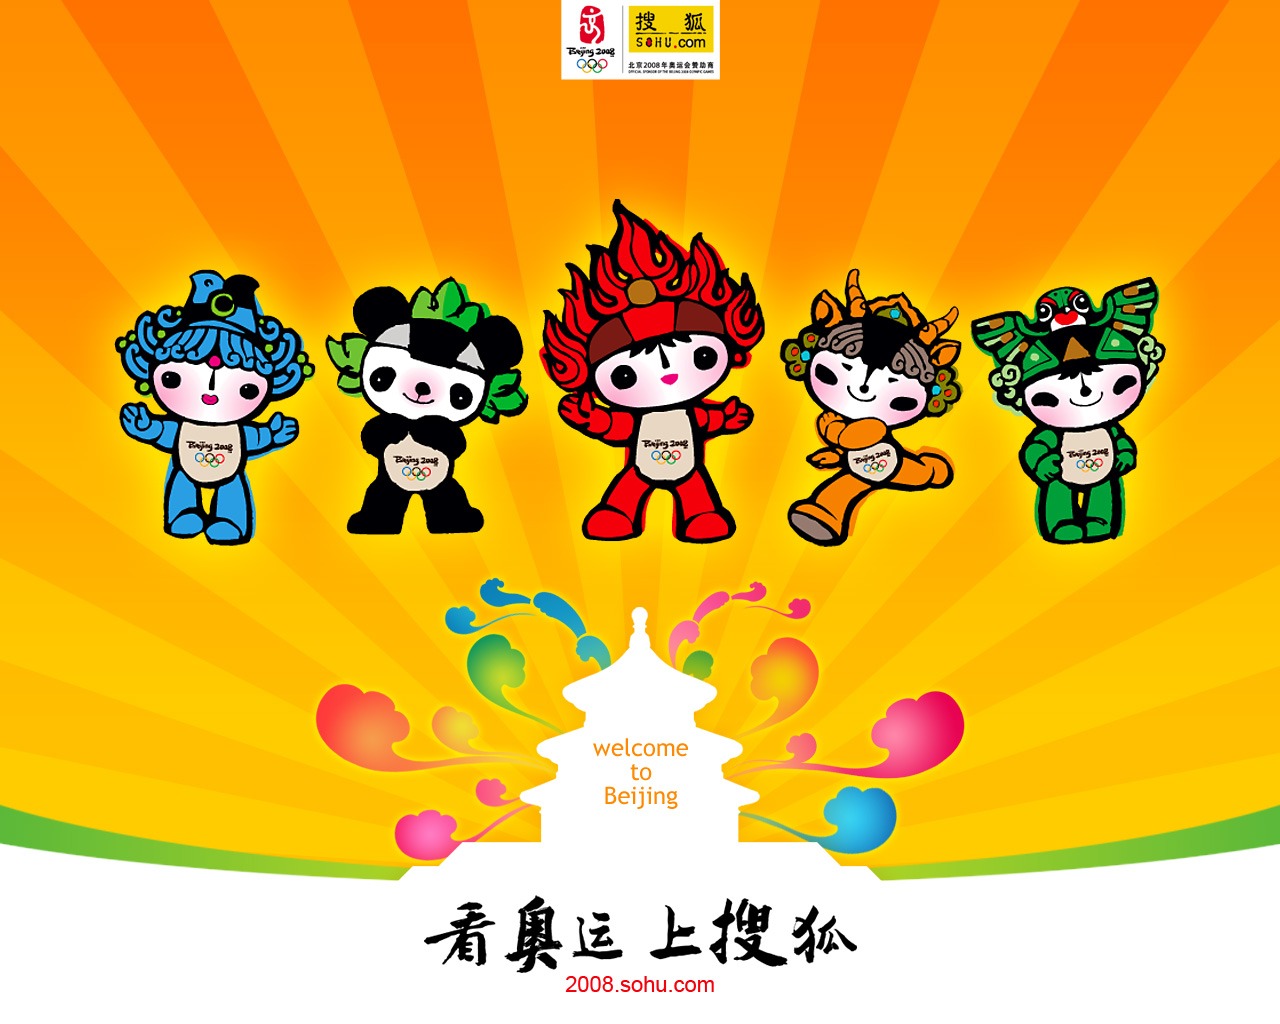 Sohu Olympic Series Wallpaper #3 - 1280x1024